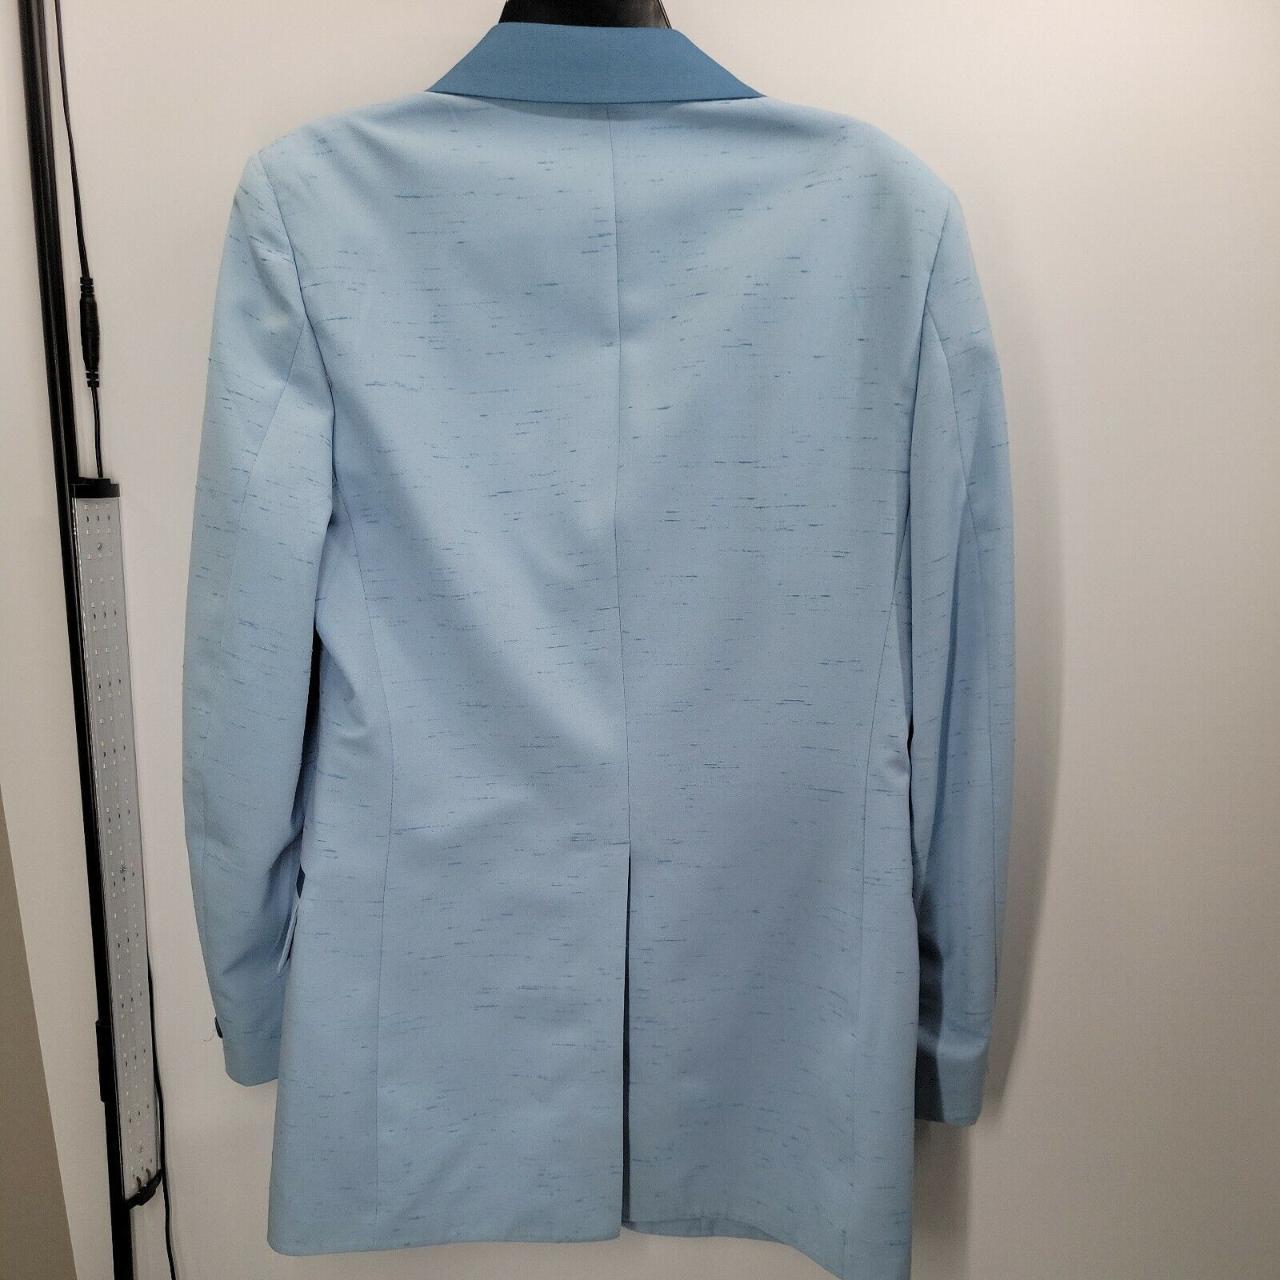 Product Image 2 - Vintage Blue Leisure Suit Jacket